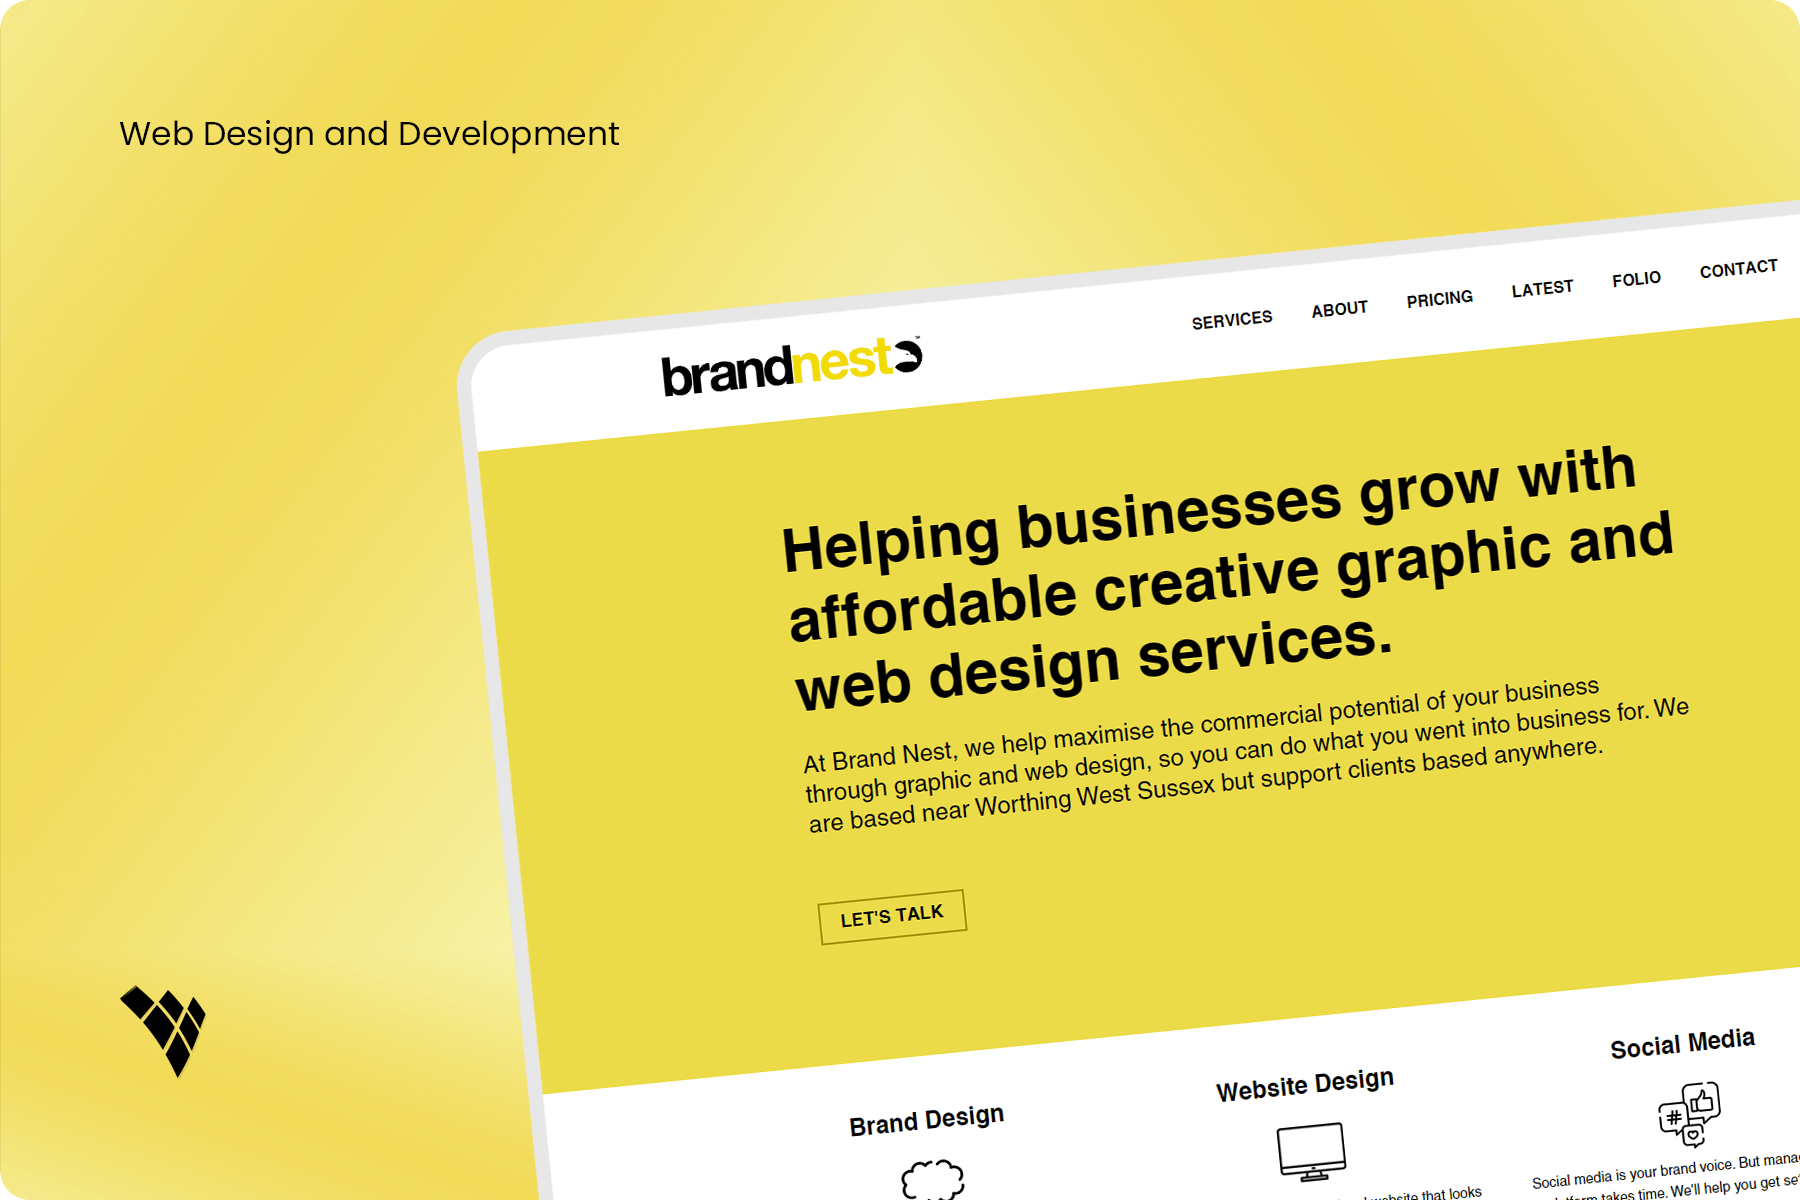 web design and development - brandnest